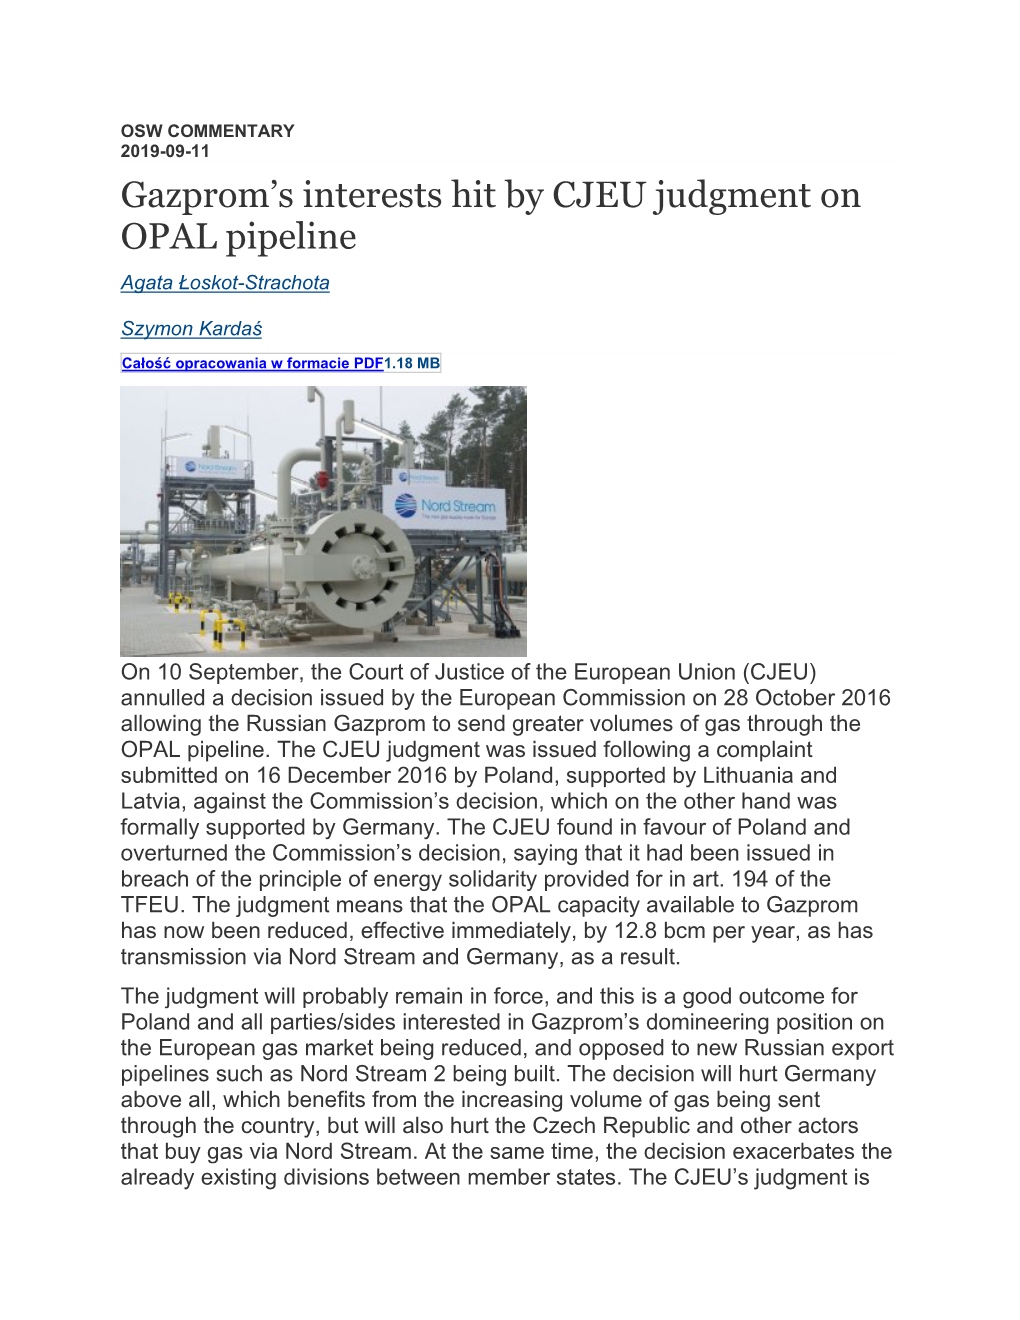 Gazprom's Interests Hit by CJEU Judgment on OPAL Pipeline